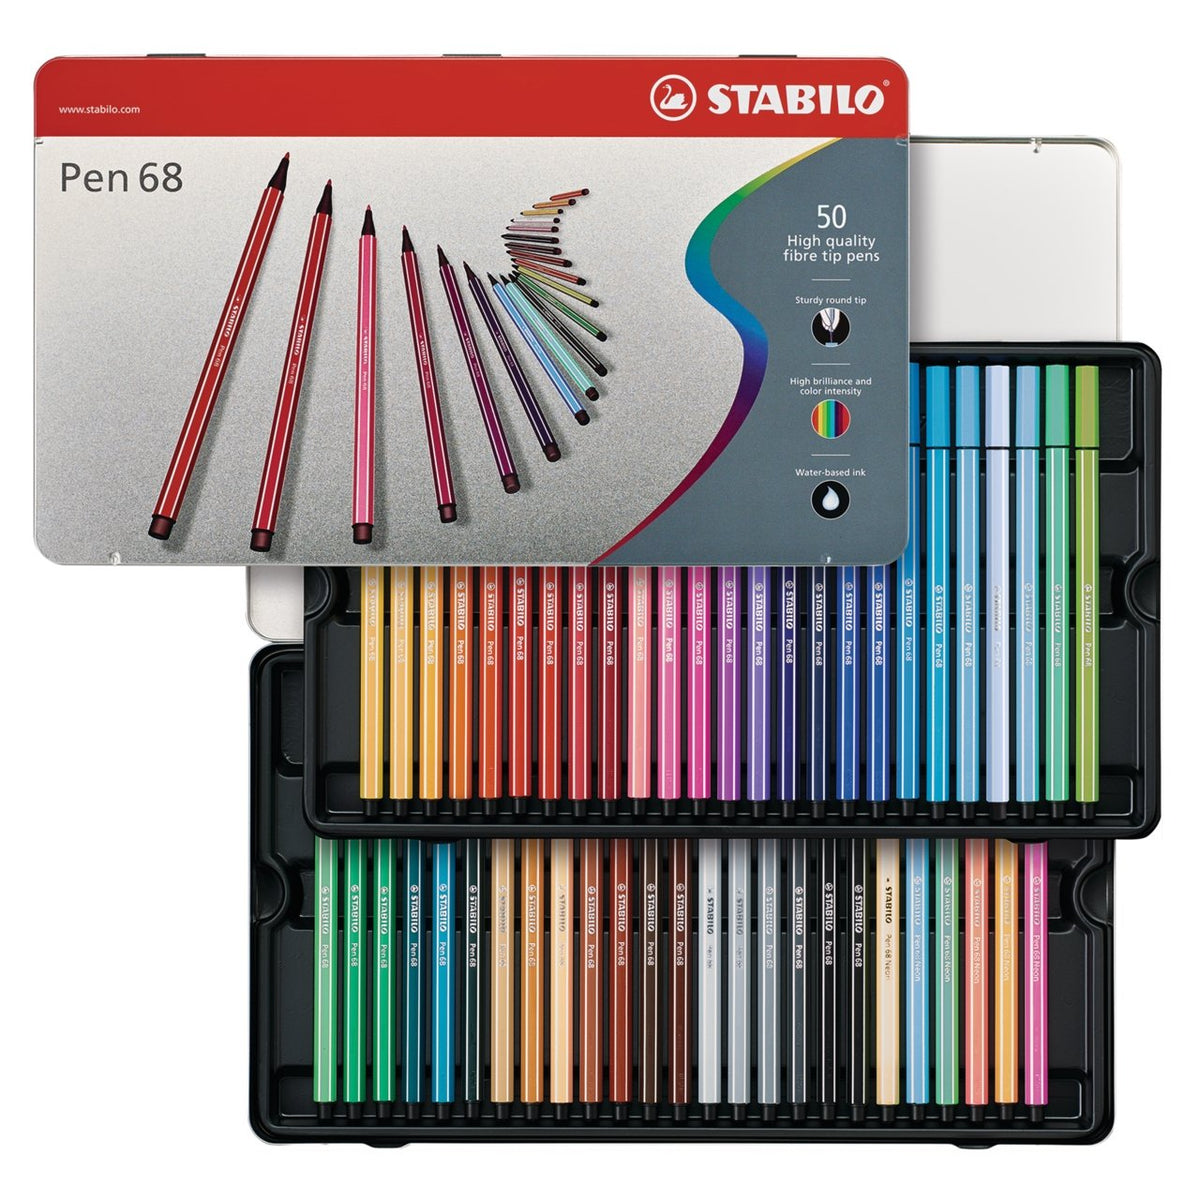 Feutres Stabilo Pen 68 - 50 couleurs assorties - Scrapmalin